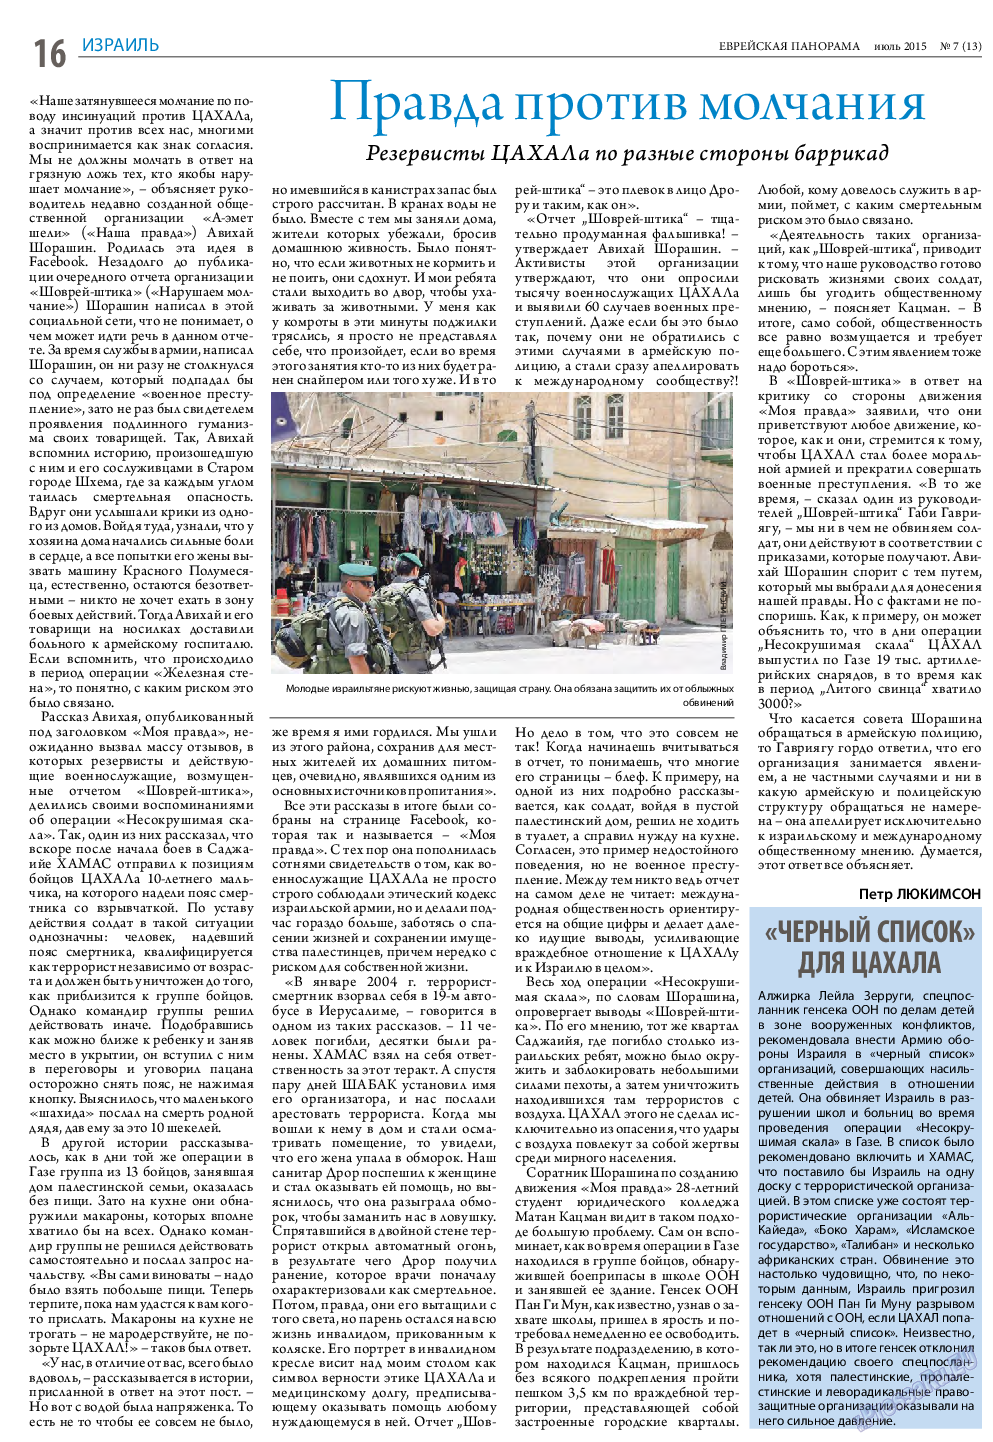 Еврейская панорама, газета. 2015 №7 стр.16